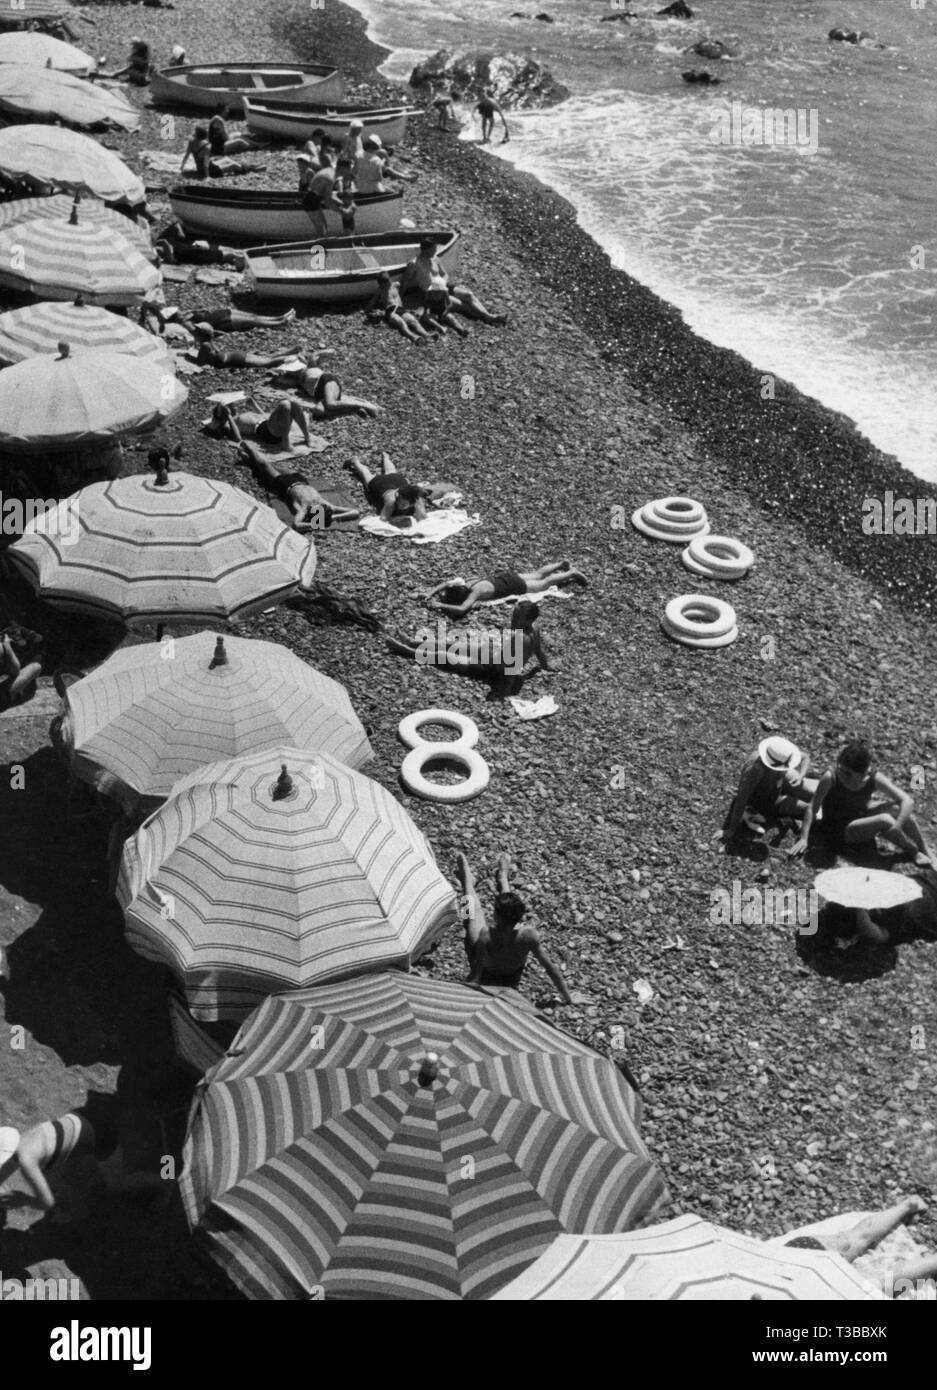 on the beach, 1950 Stock Photo